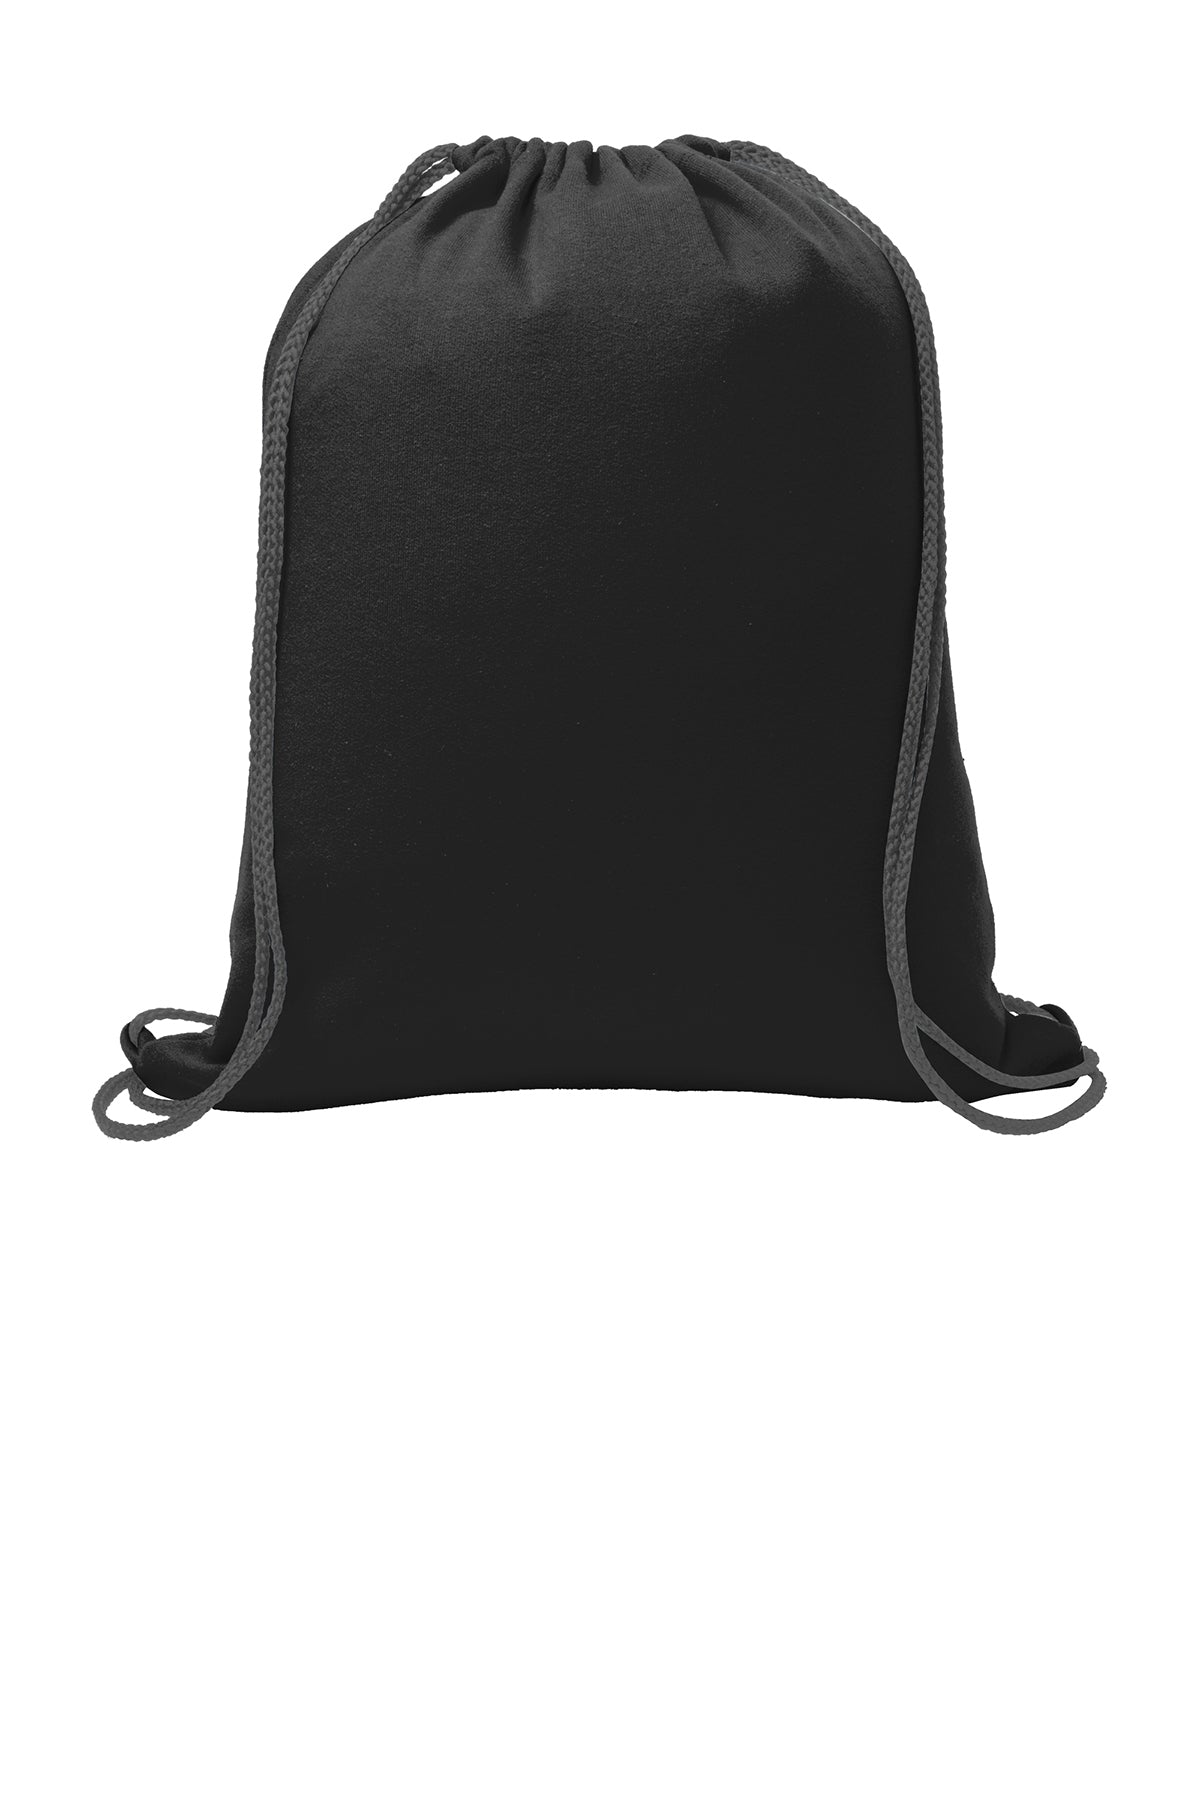 Port & Company Core Fleece Branded Cinch Packs, Jet Black